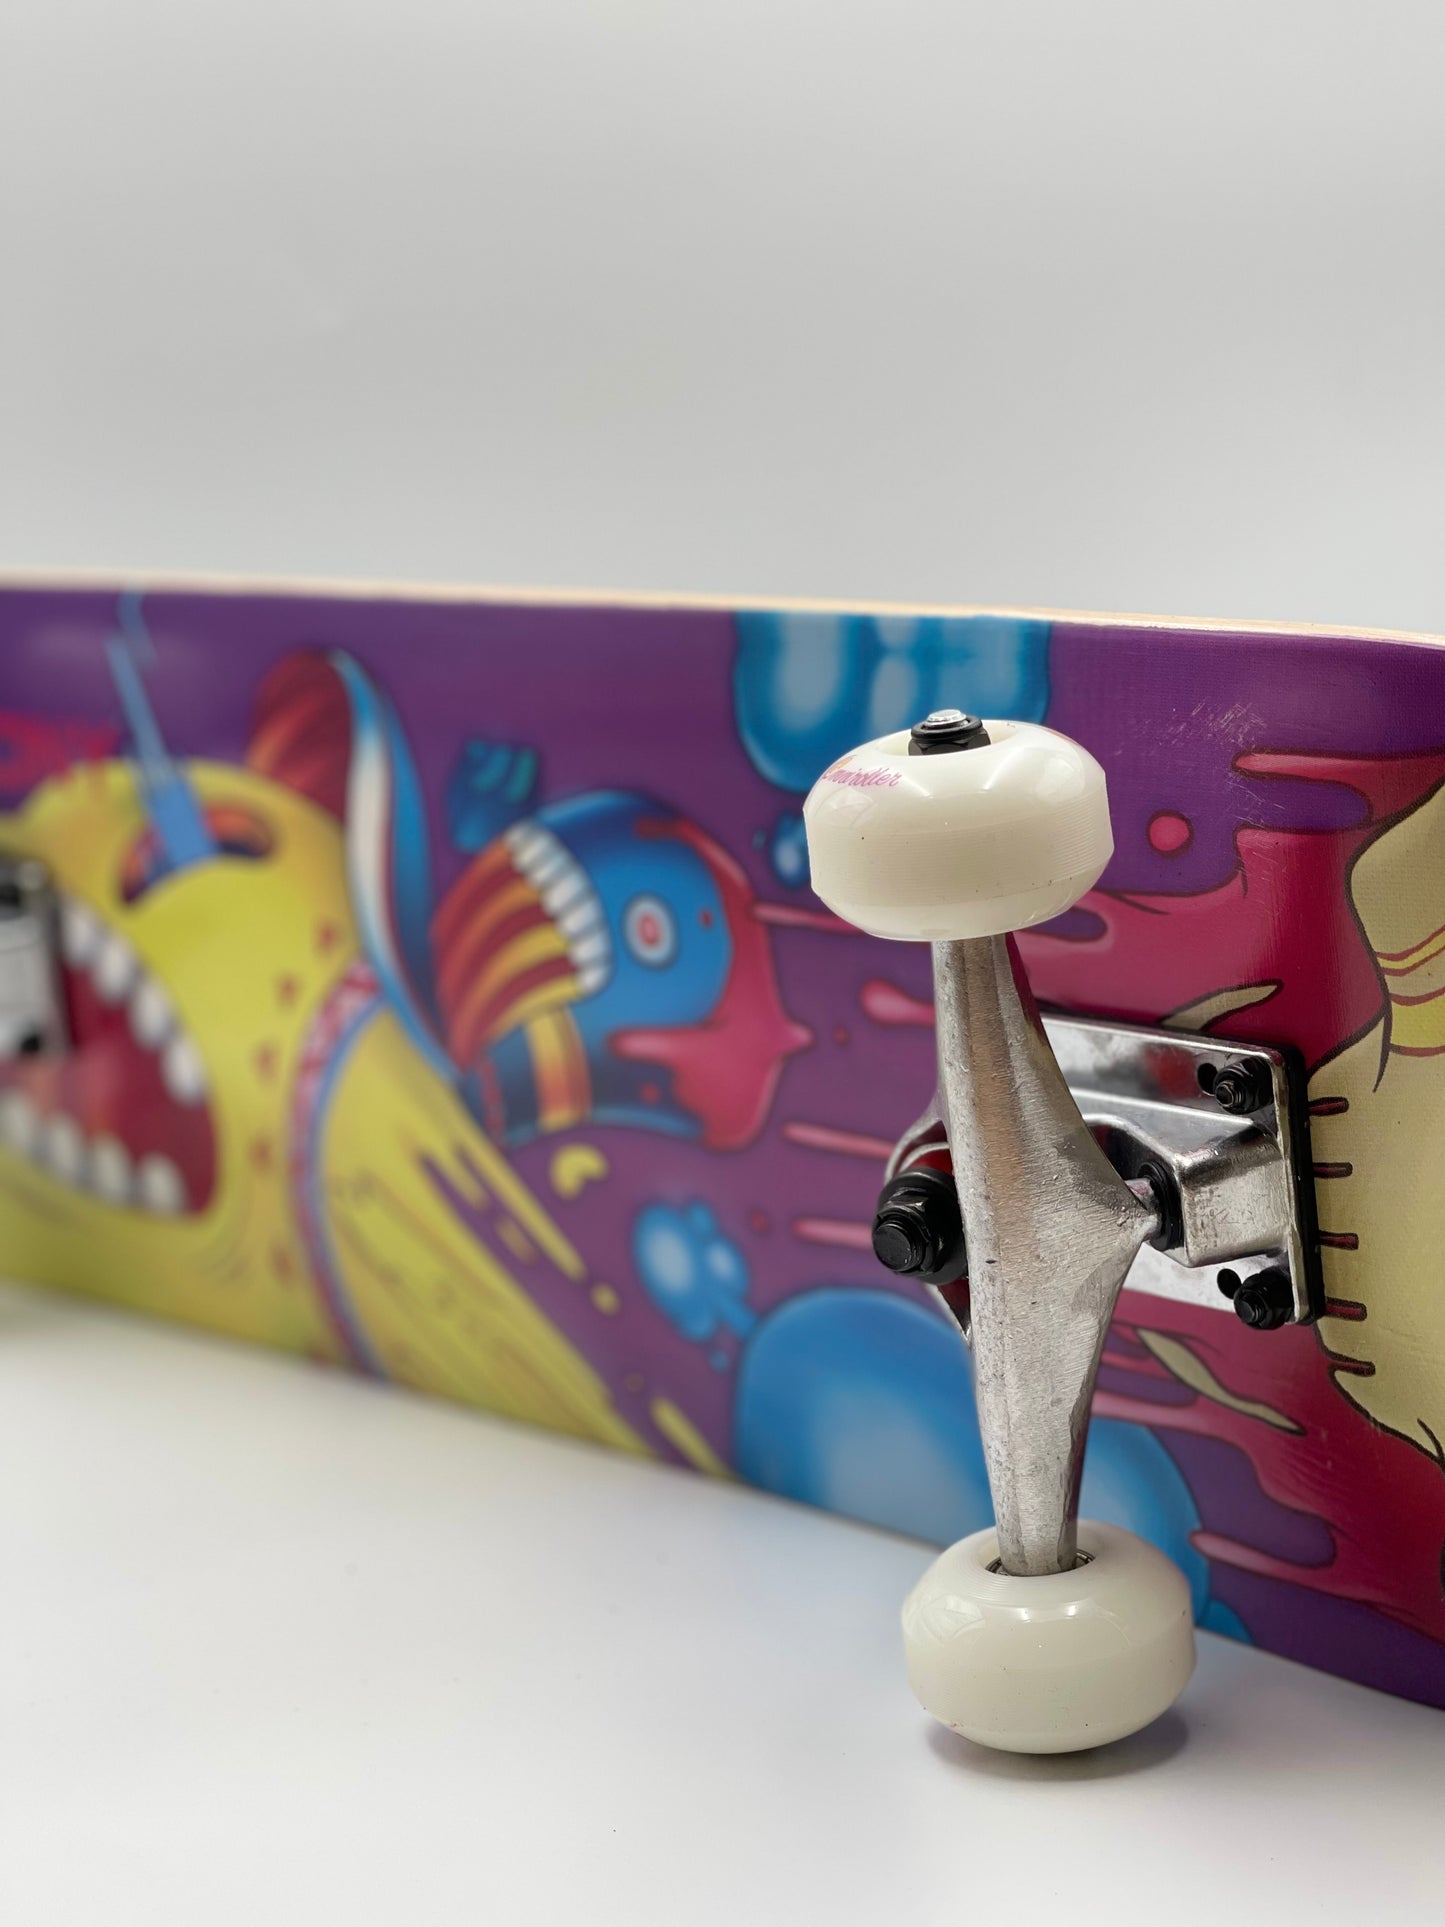 Omni Large Sky Dye Skateboard